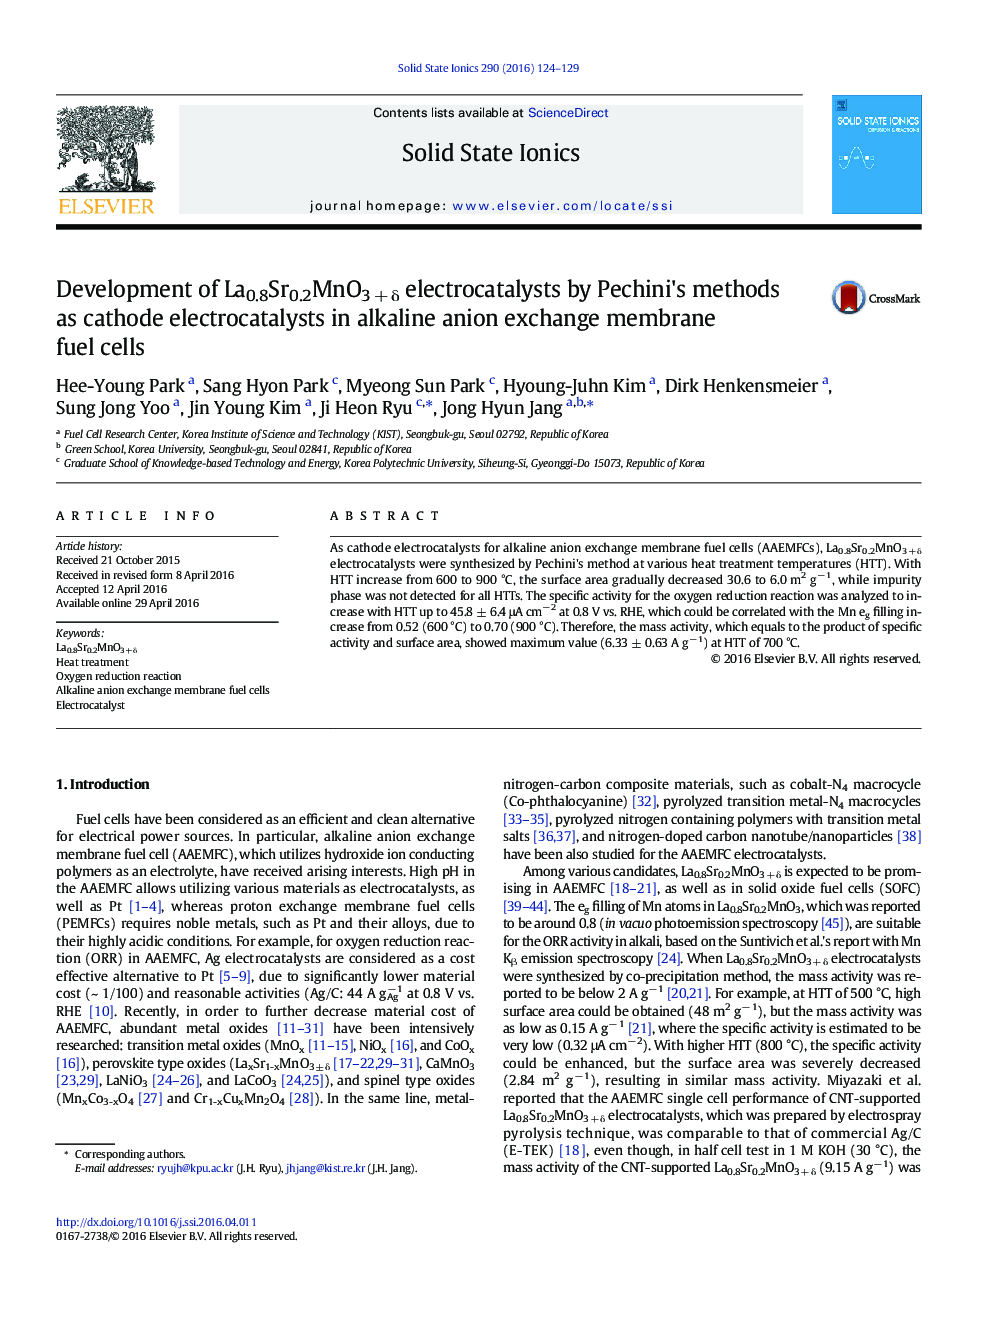 Development of La0.8Sr0.2MnO3 + δ electrocatalysts by Pechini's methods as cathode electrocatalysts in alkaline anion exchange membrane fuel cells